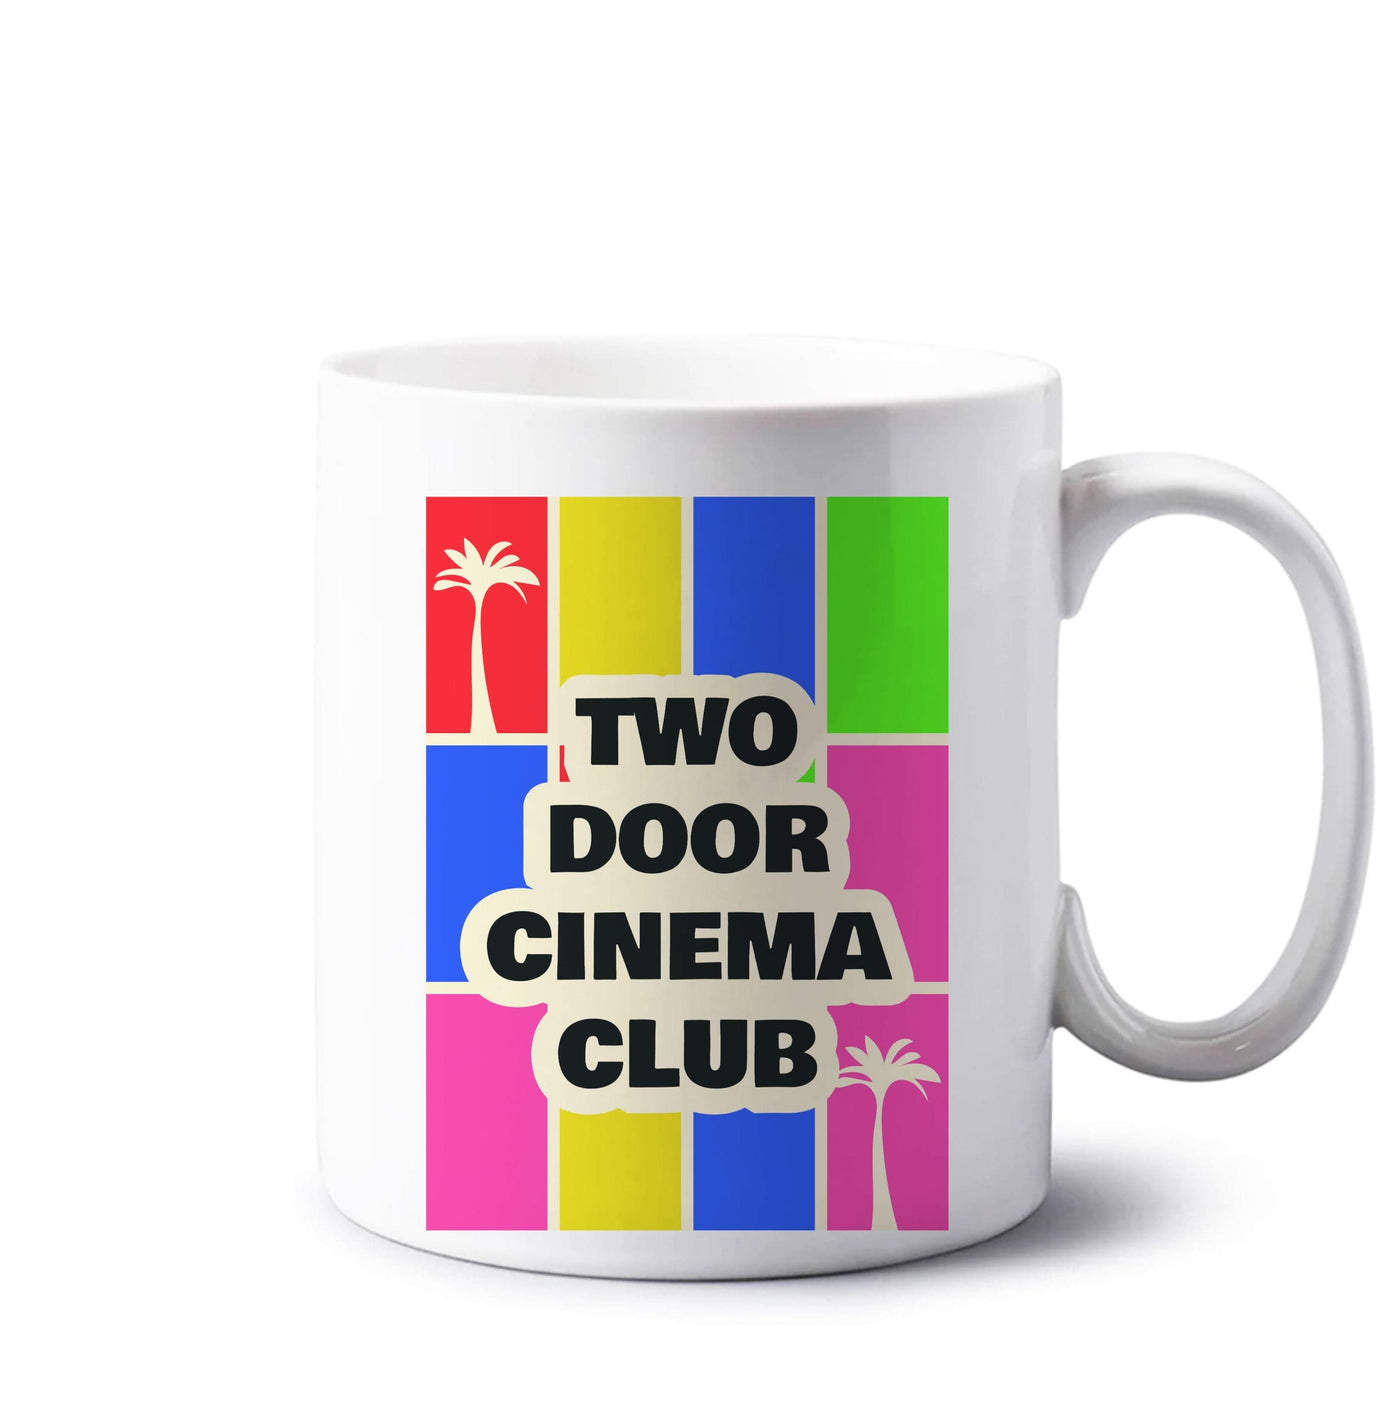 Two Door Cinema Club - Festival Mug